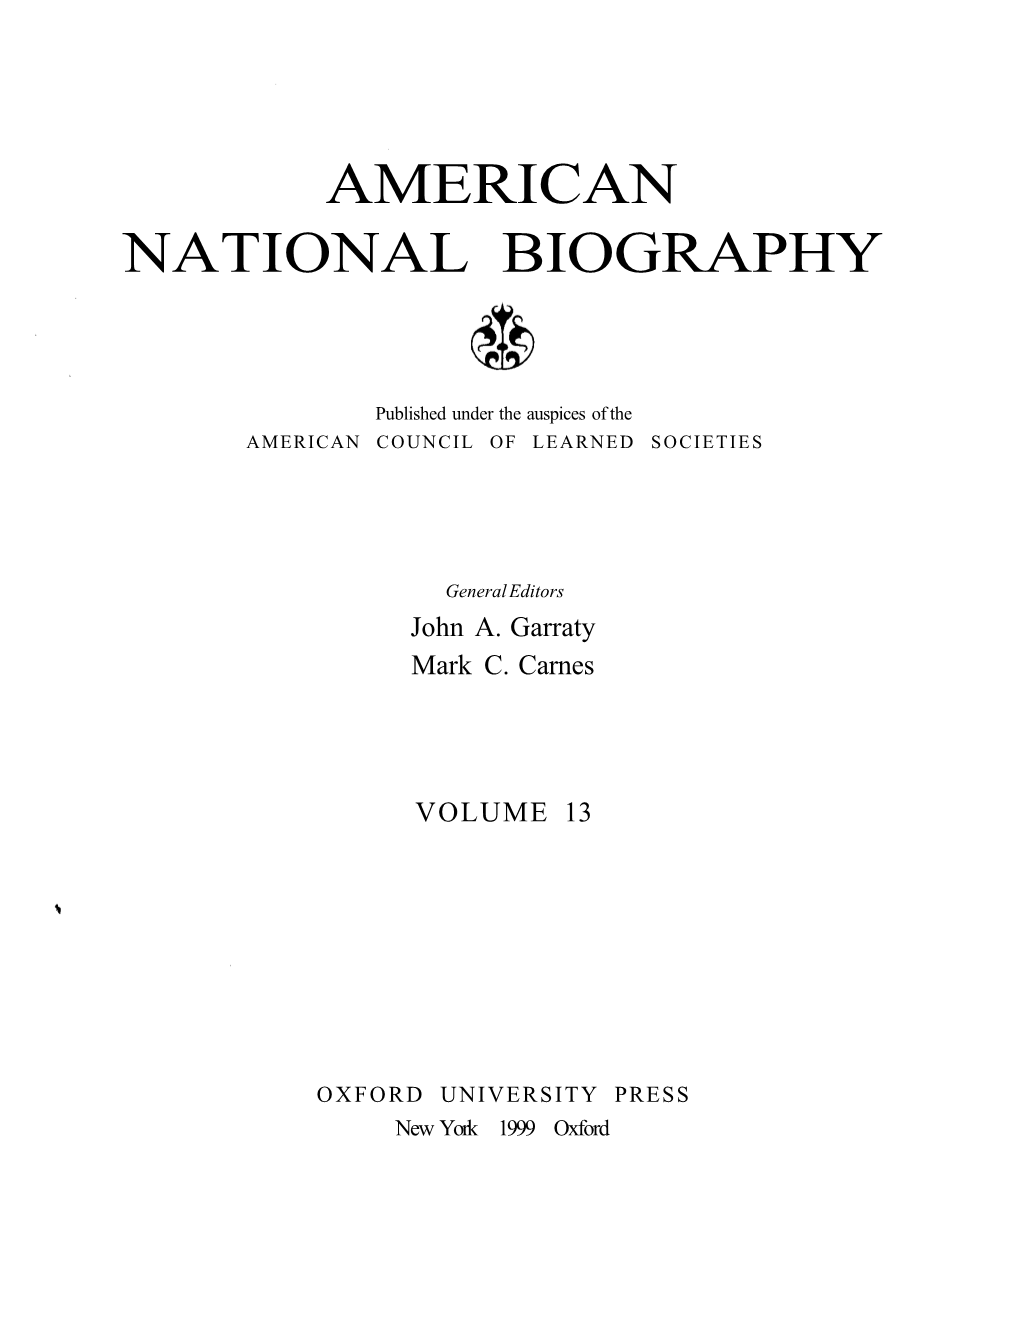 Garraty, John A. and Mark C. Carnes, Ed. American National Biography